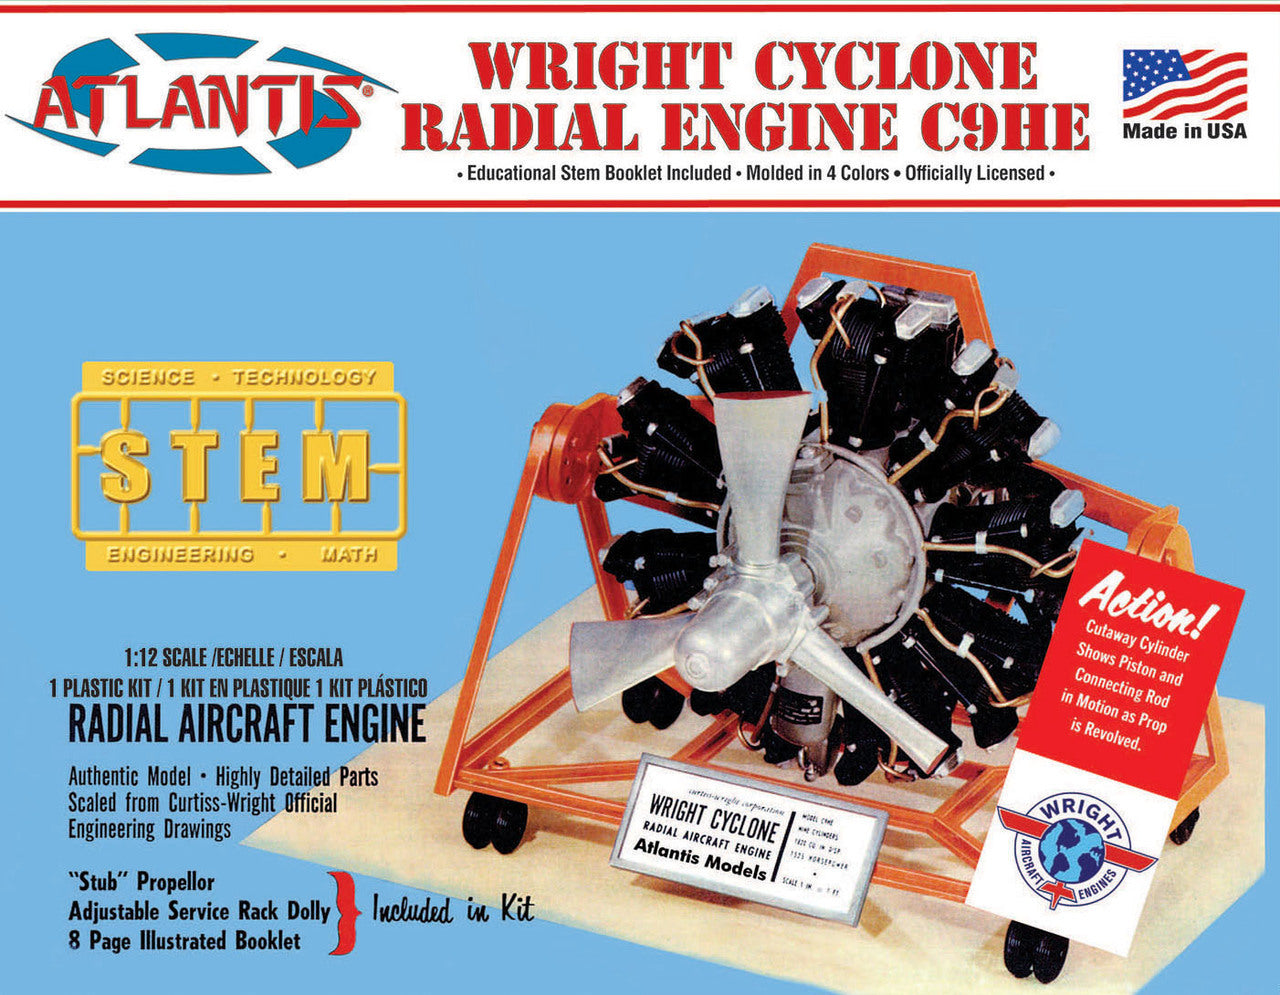 Atlantis Models M6052 1:12 C9HE Wright Cyclone Aircraft Engine Plastic Model Kit